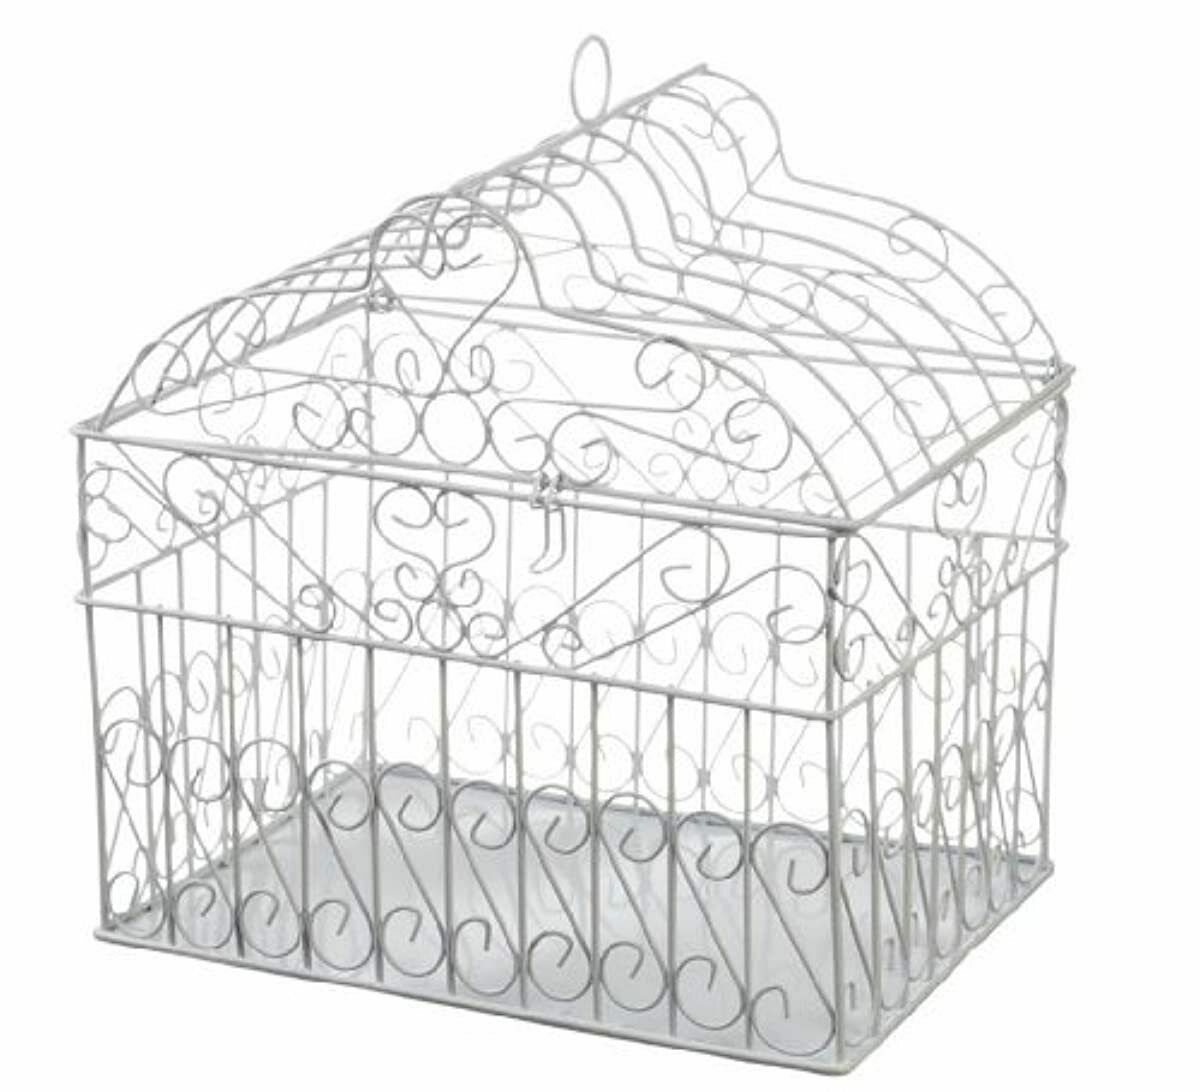 New Darice Vl1017 Metal Bridal Birdcage Card Holder, White Free2dayship Taxfree